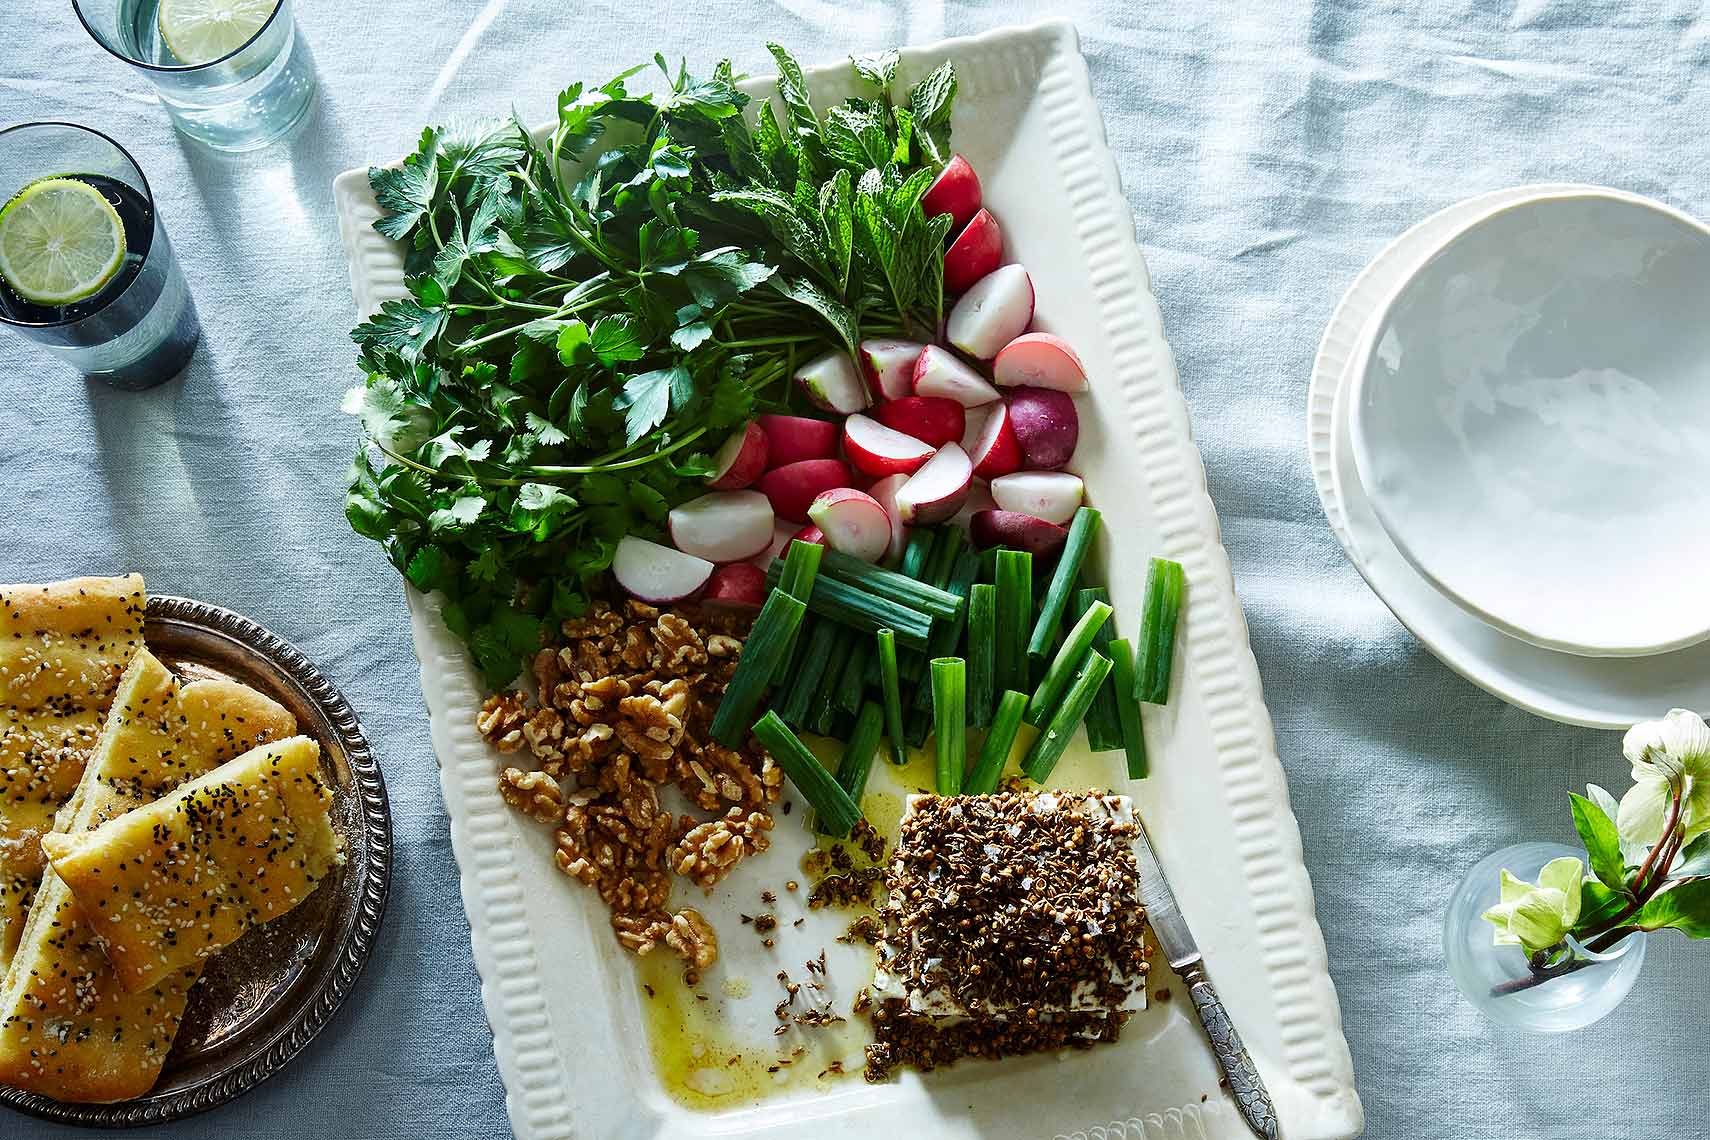 2016-0307_persian-new-year-herb-platter-with-feta-walnuts-radhises-and-flatbread_james-ransom-033